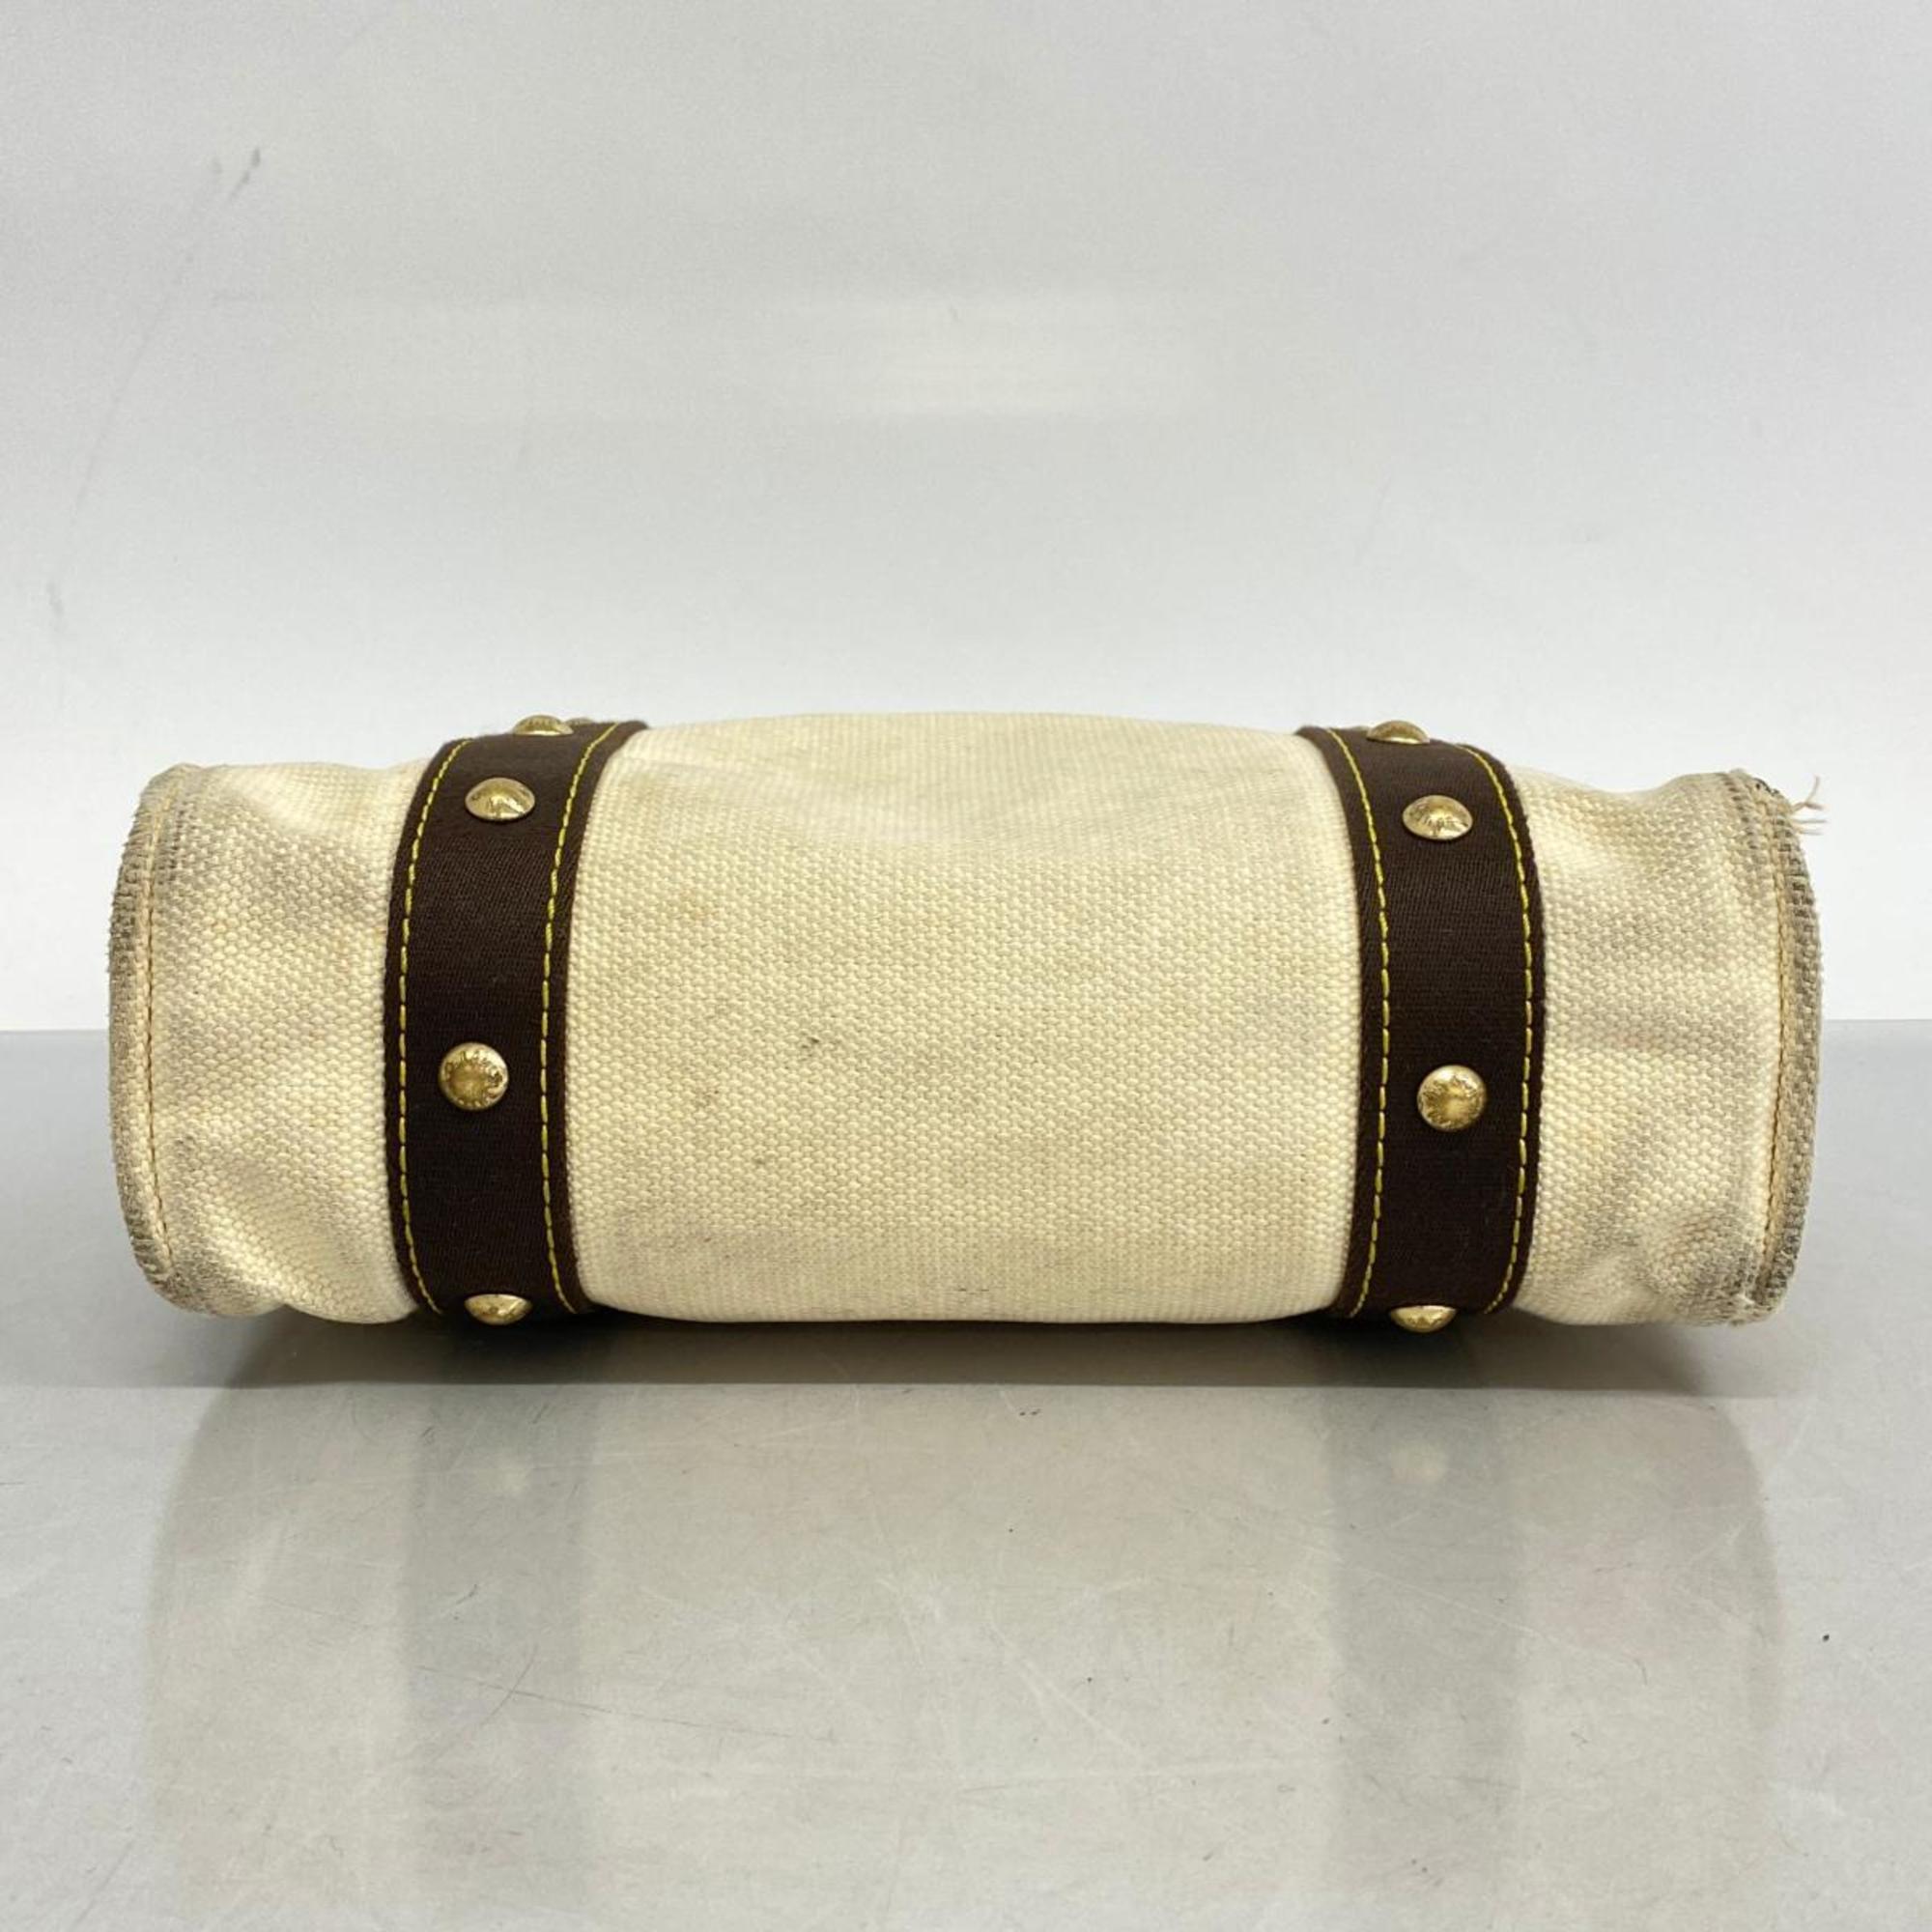 Louis Vuitton Tote Bag Antigua Cabas MM M40036 Natural Women's